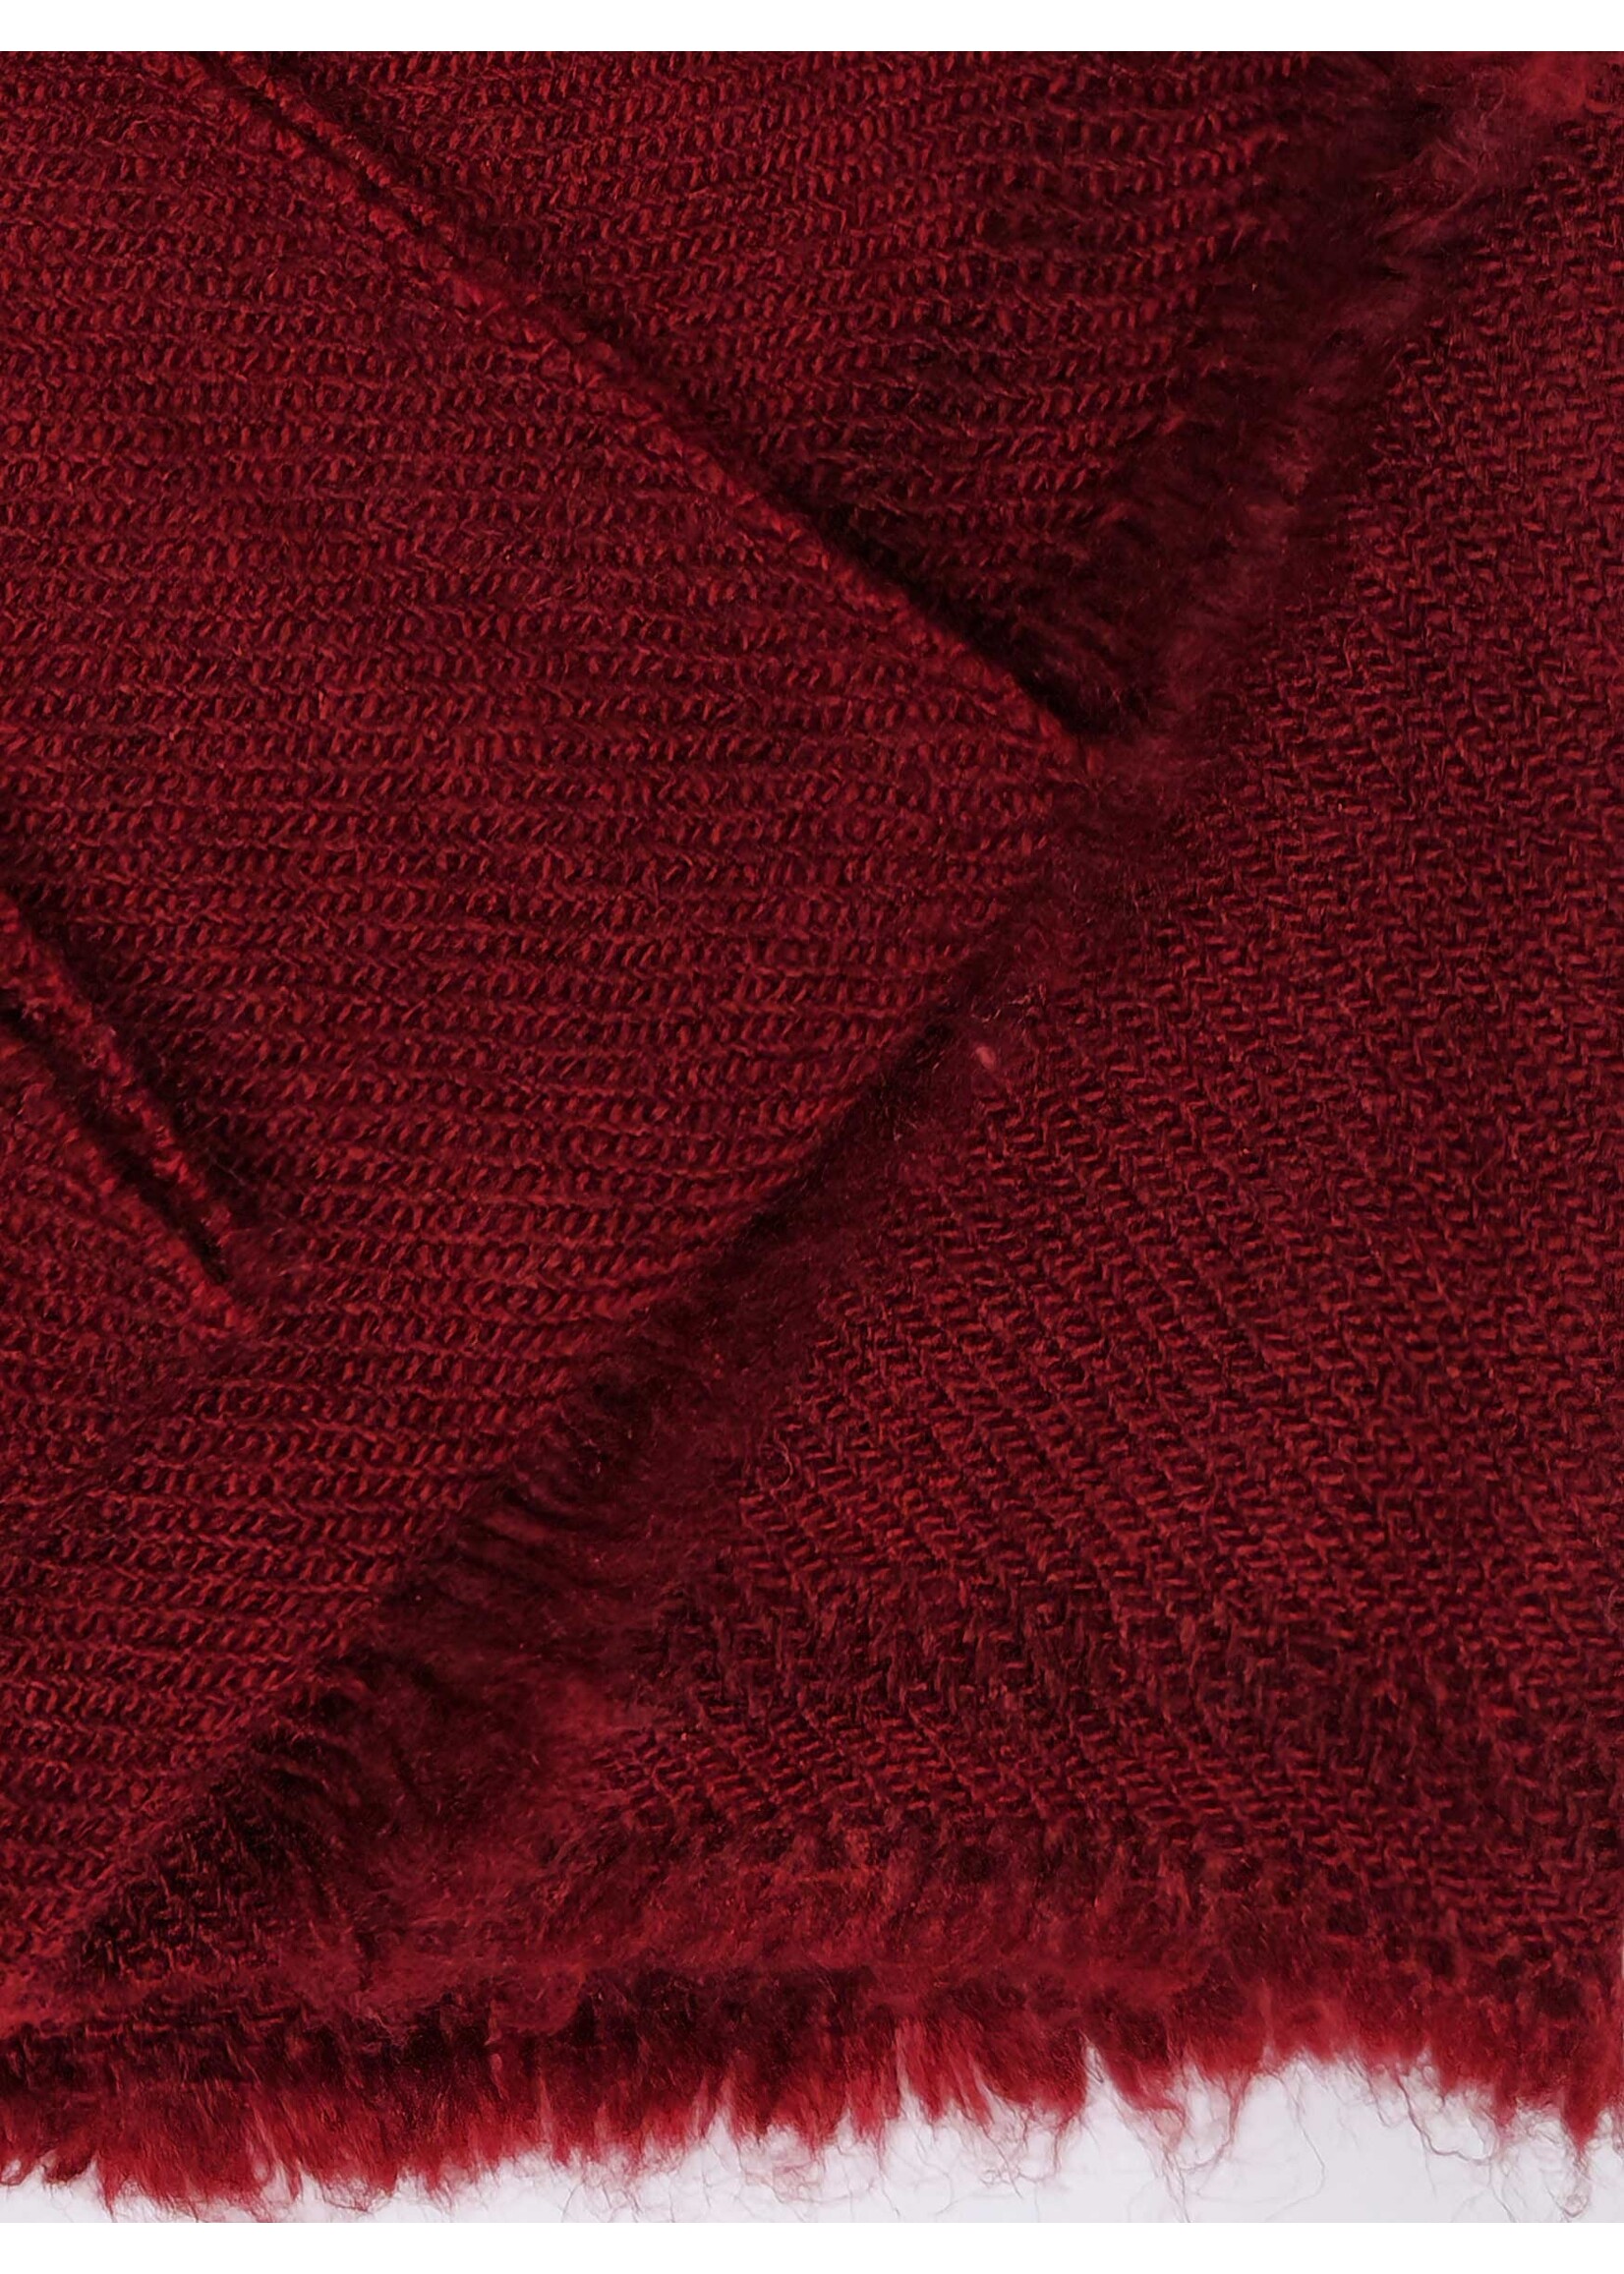 Sciarpa in pashmina rosso borgogna, 35 x 160 cm